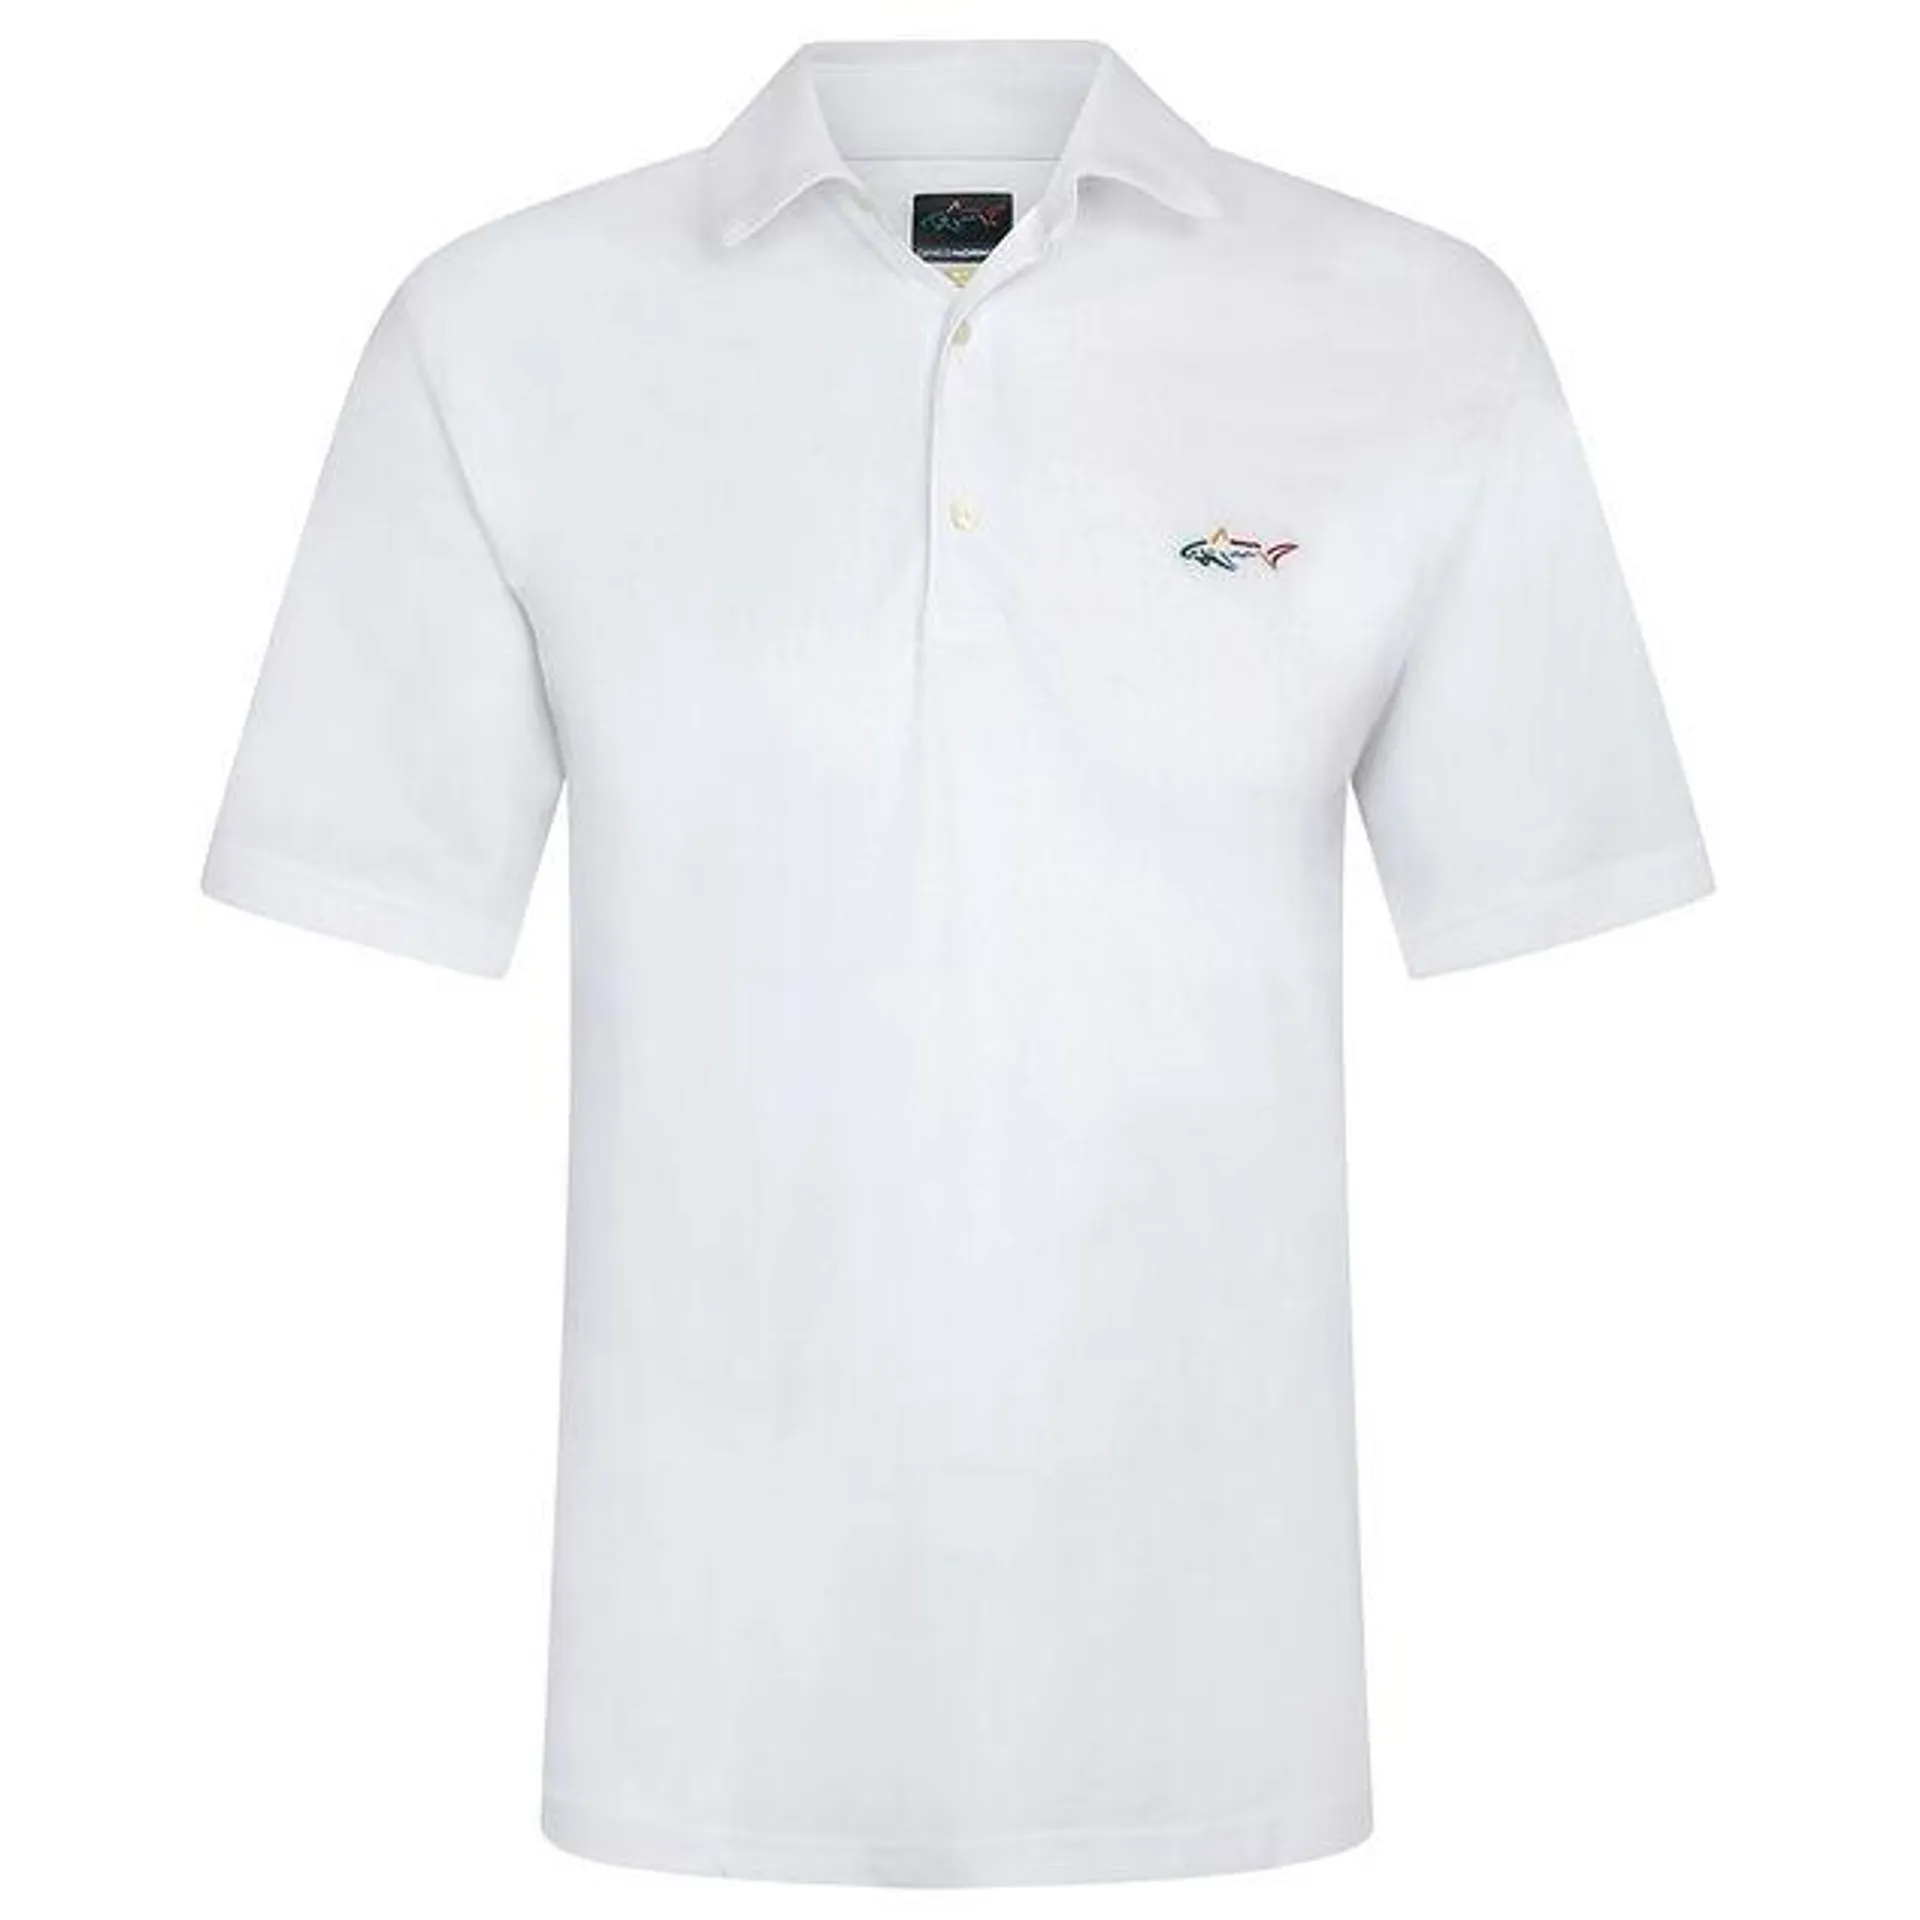 Greg Norman Men's Shark Logo Golf Polo Shirt